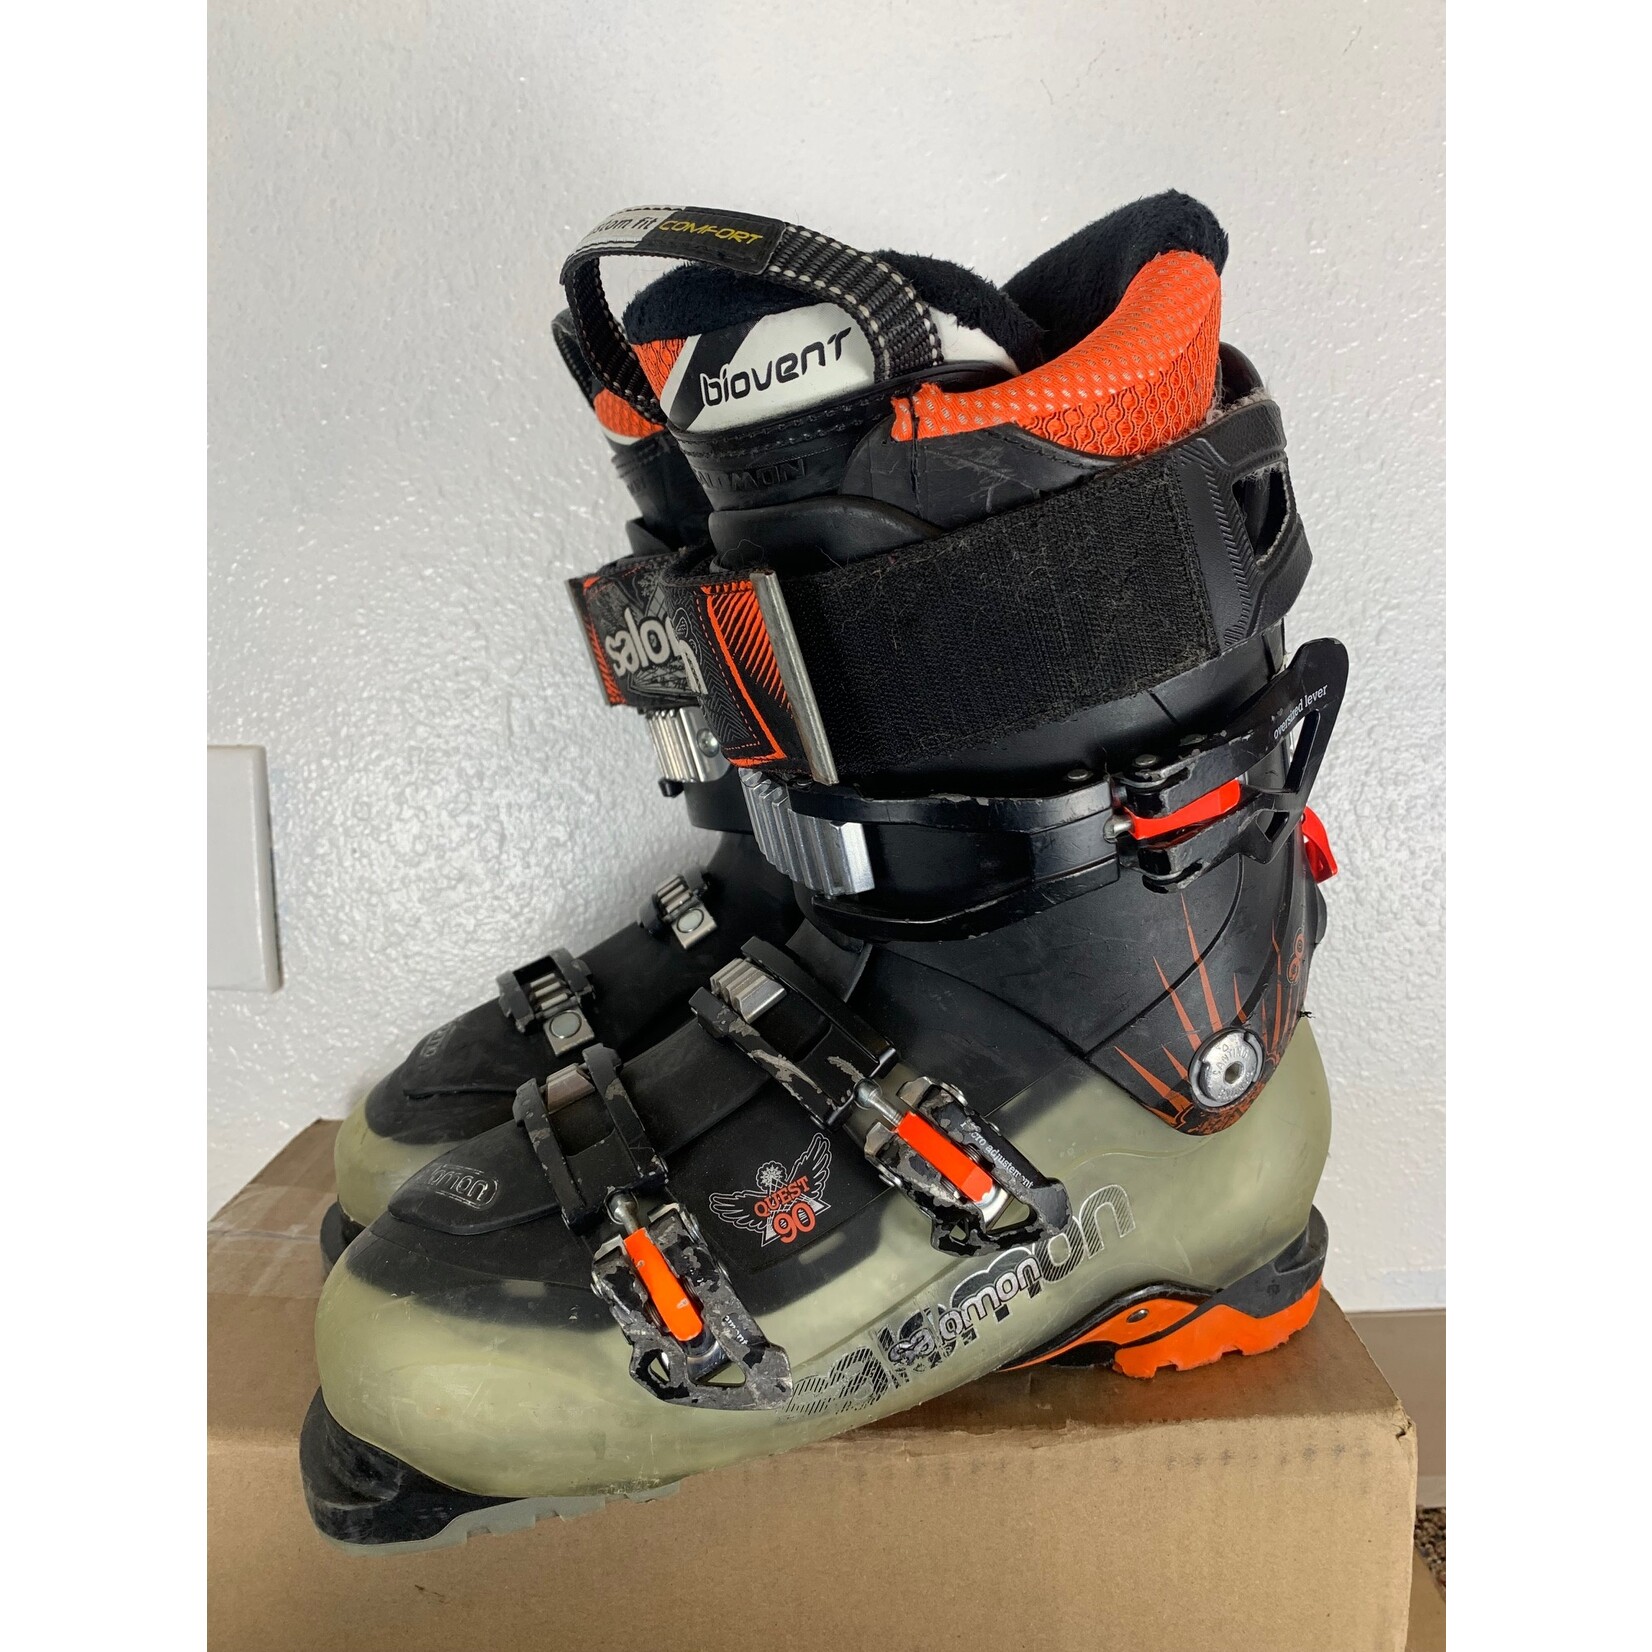 Salomon Salomon Quest Access 90 Ski Boots, Size 27